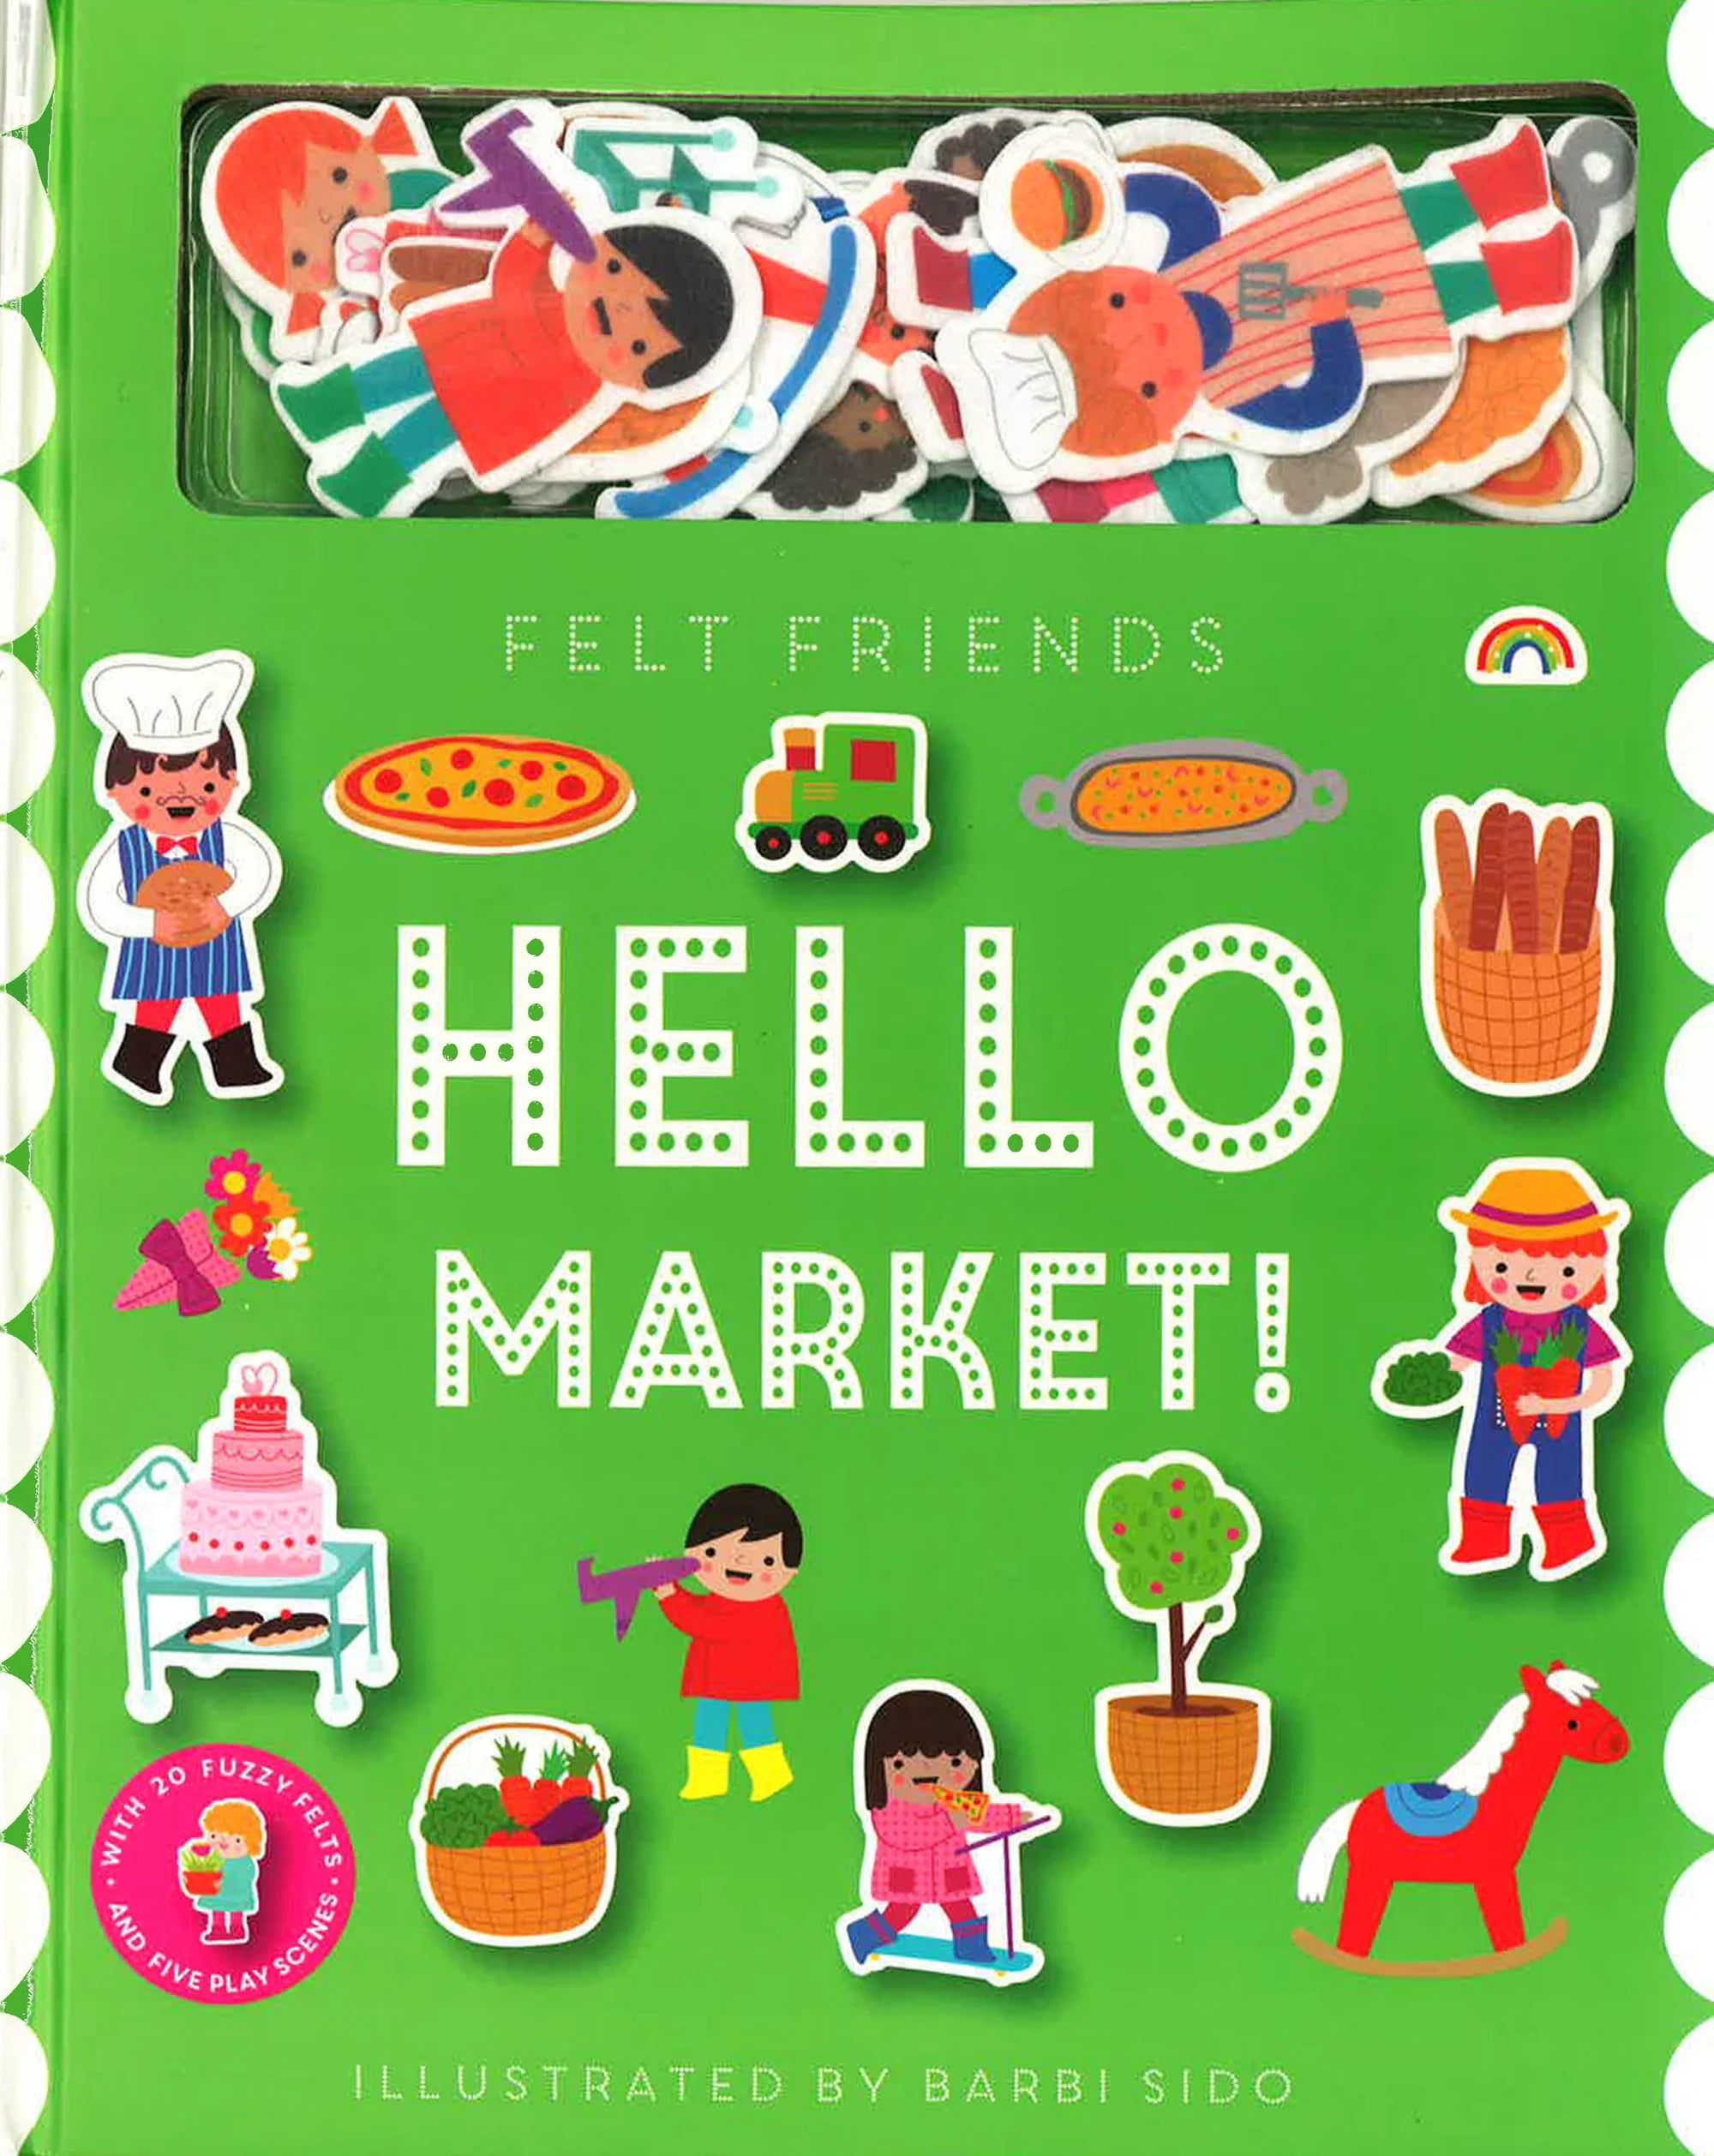 Felt Friends - Hello Market!